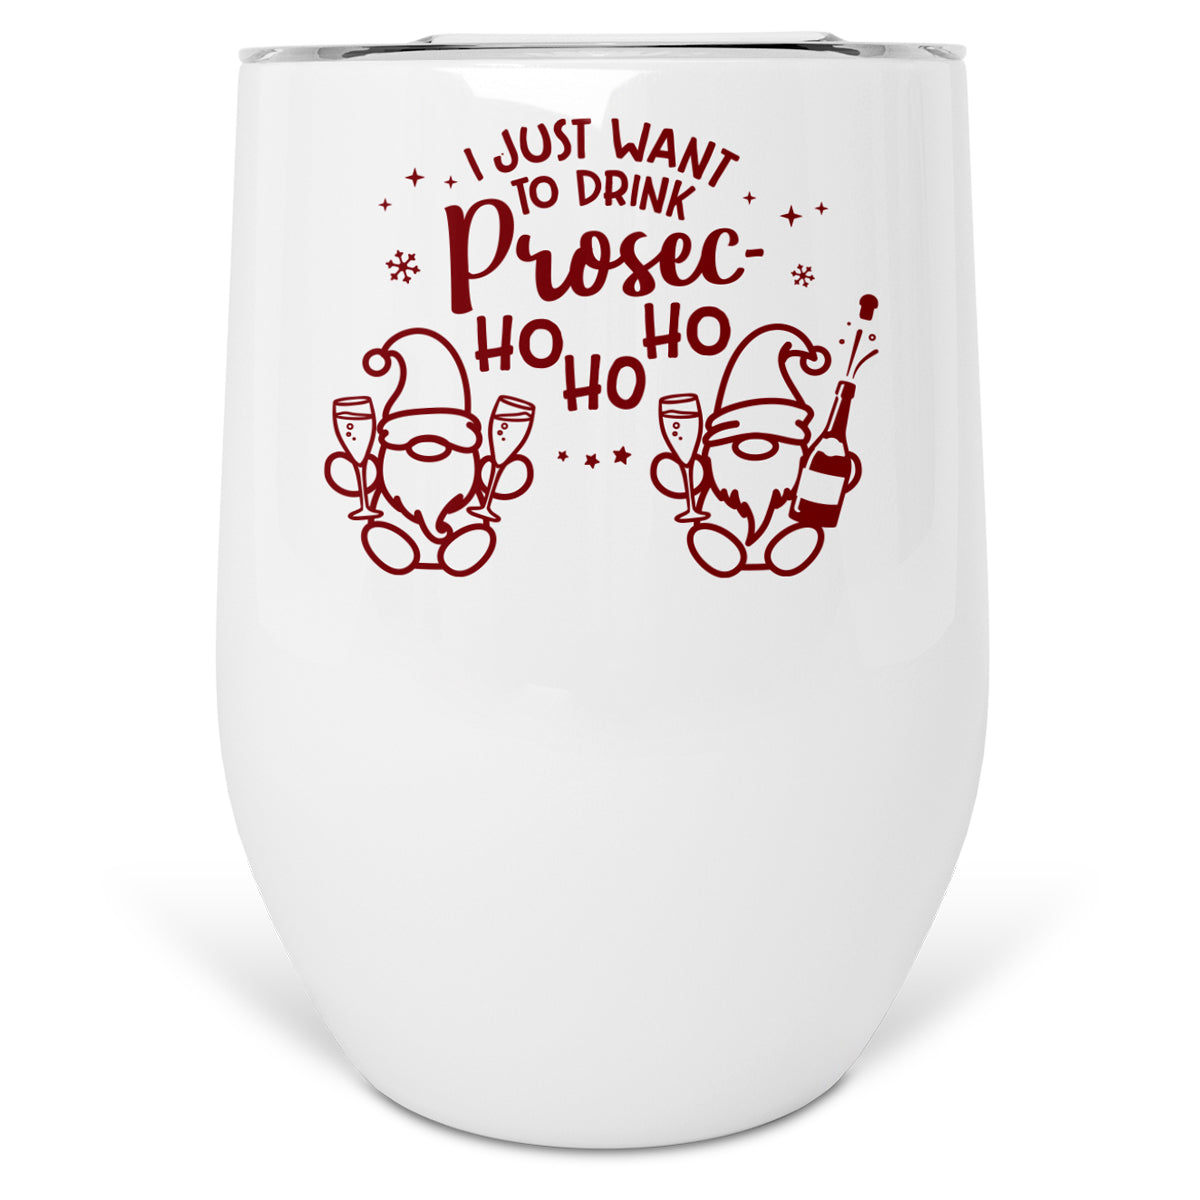 I Just Want to Drink Prosec-Ho Ho Ho Insulated Wine Tumbler